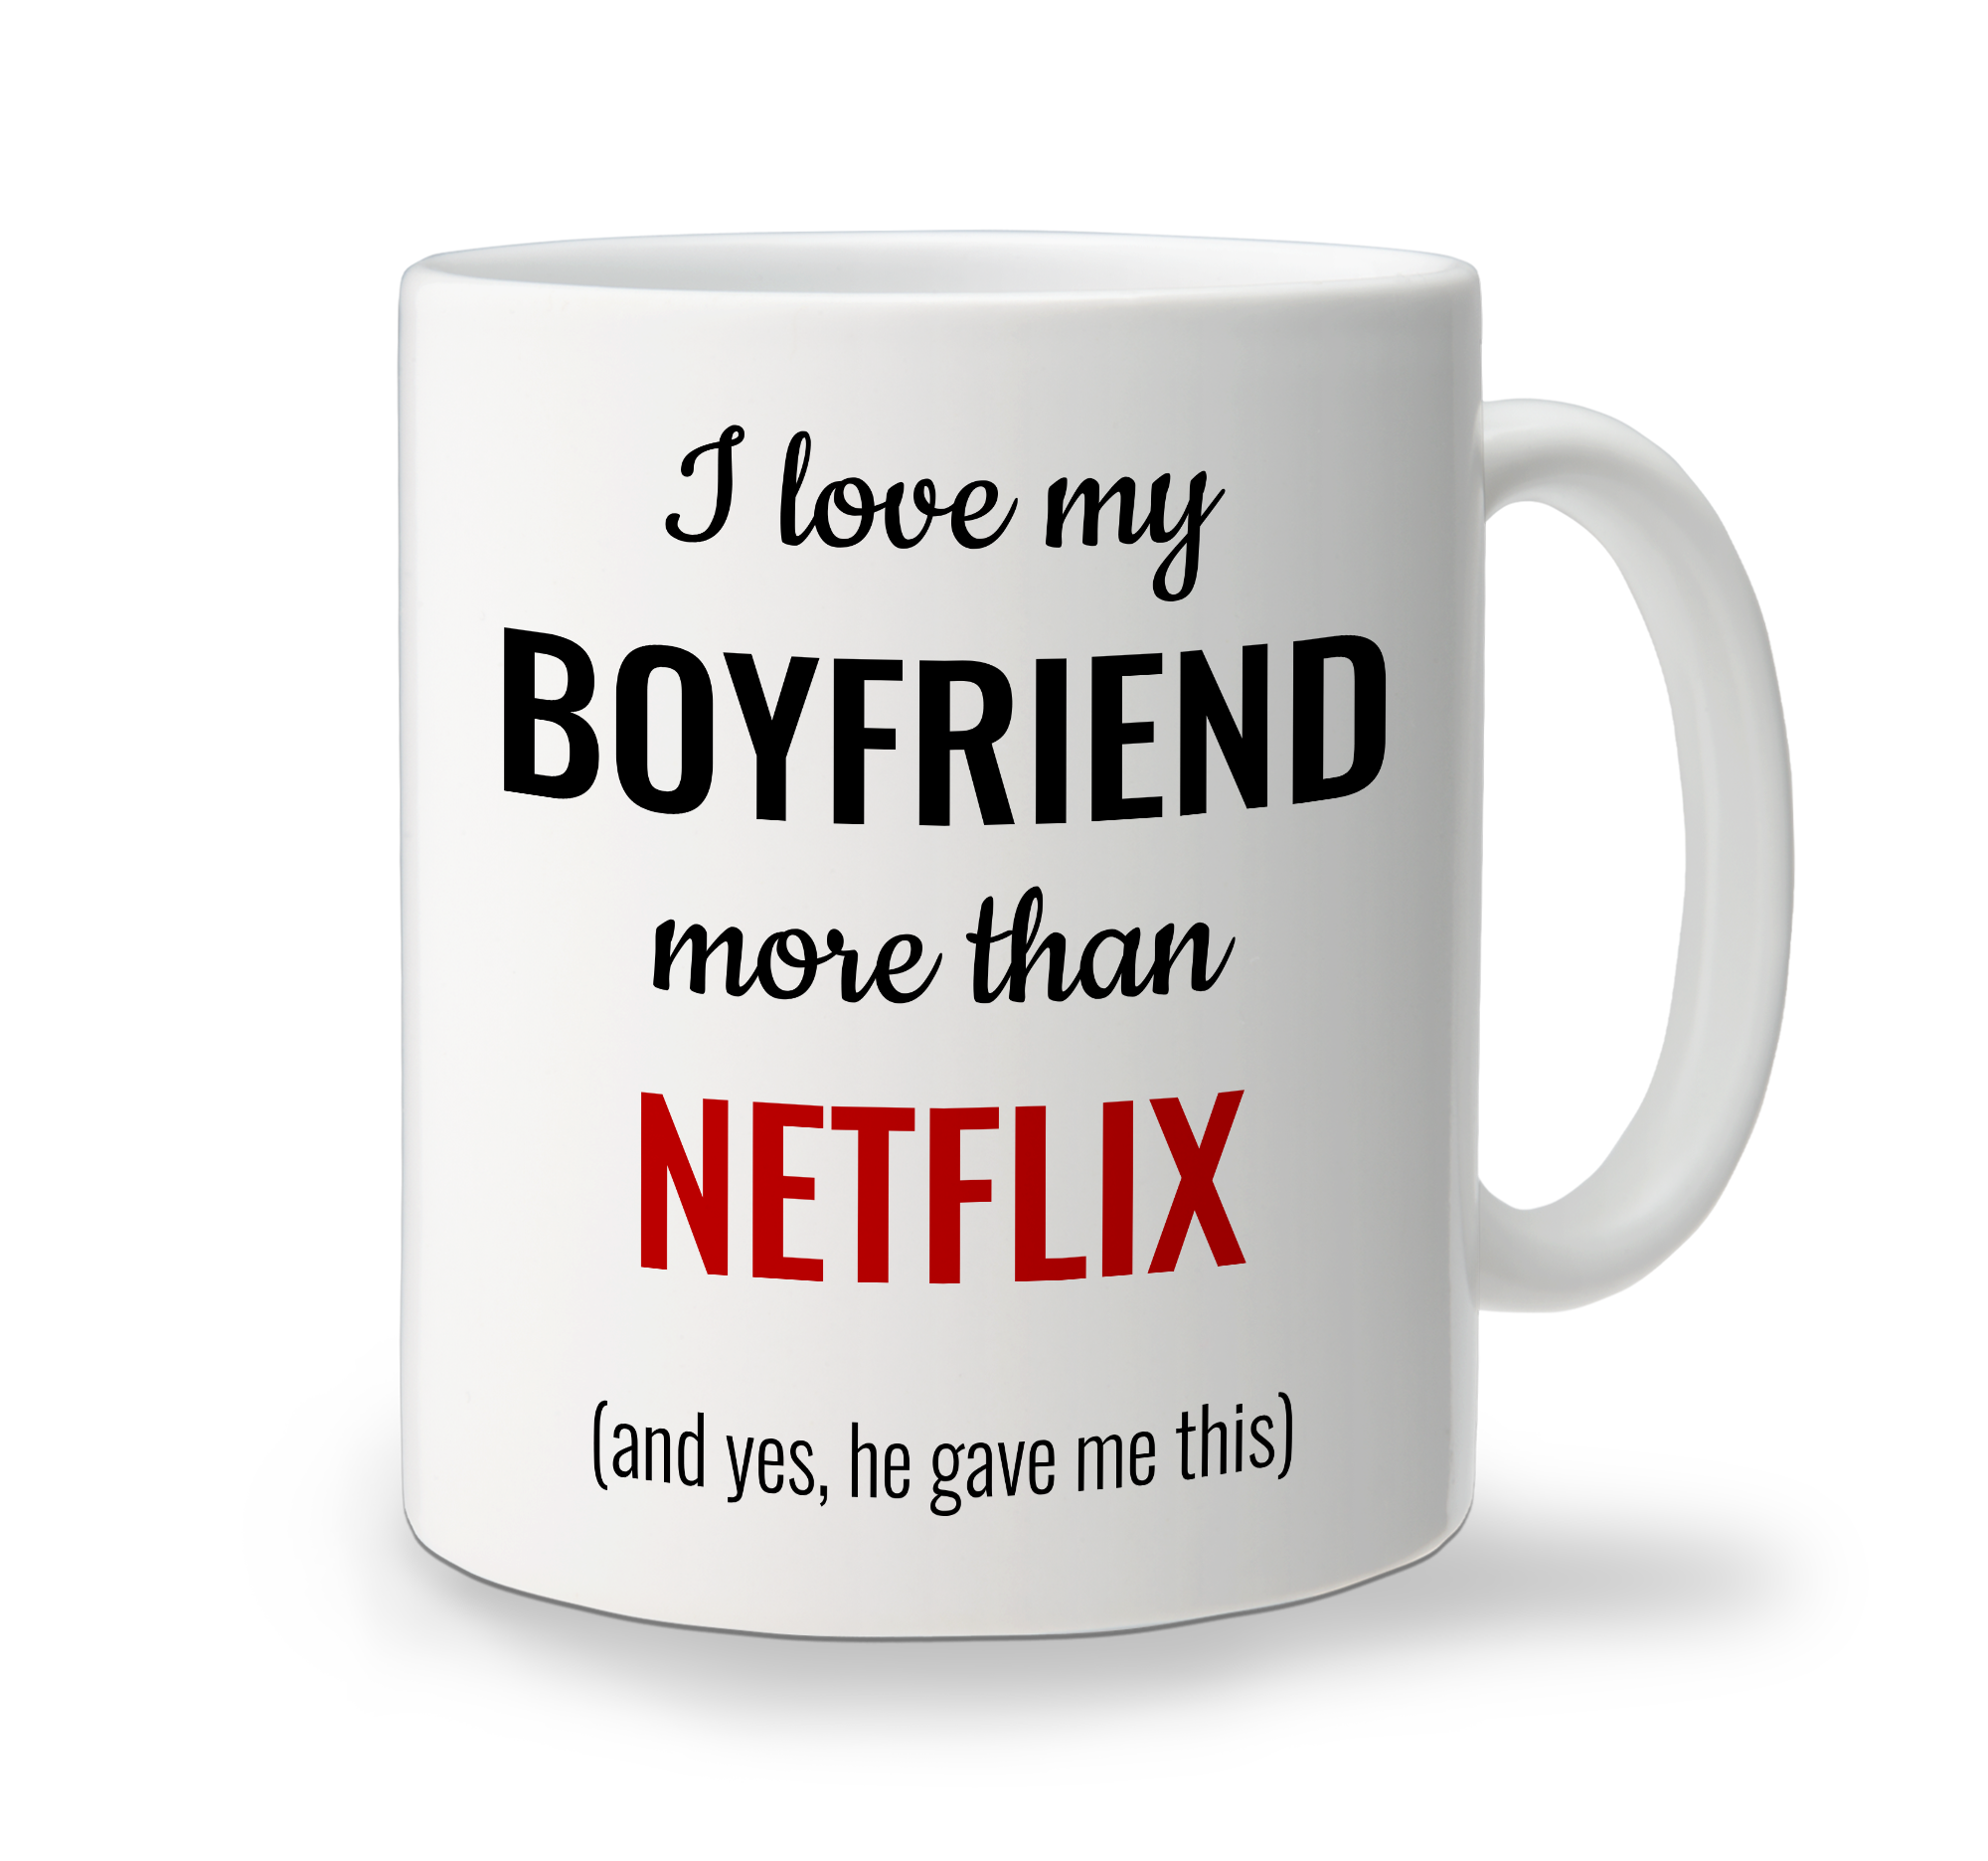 Ceramic Mug - Love More Than - Boyfriend